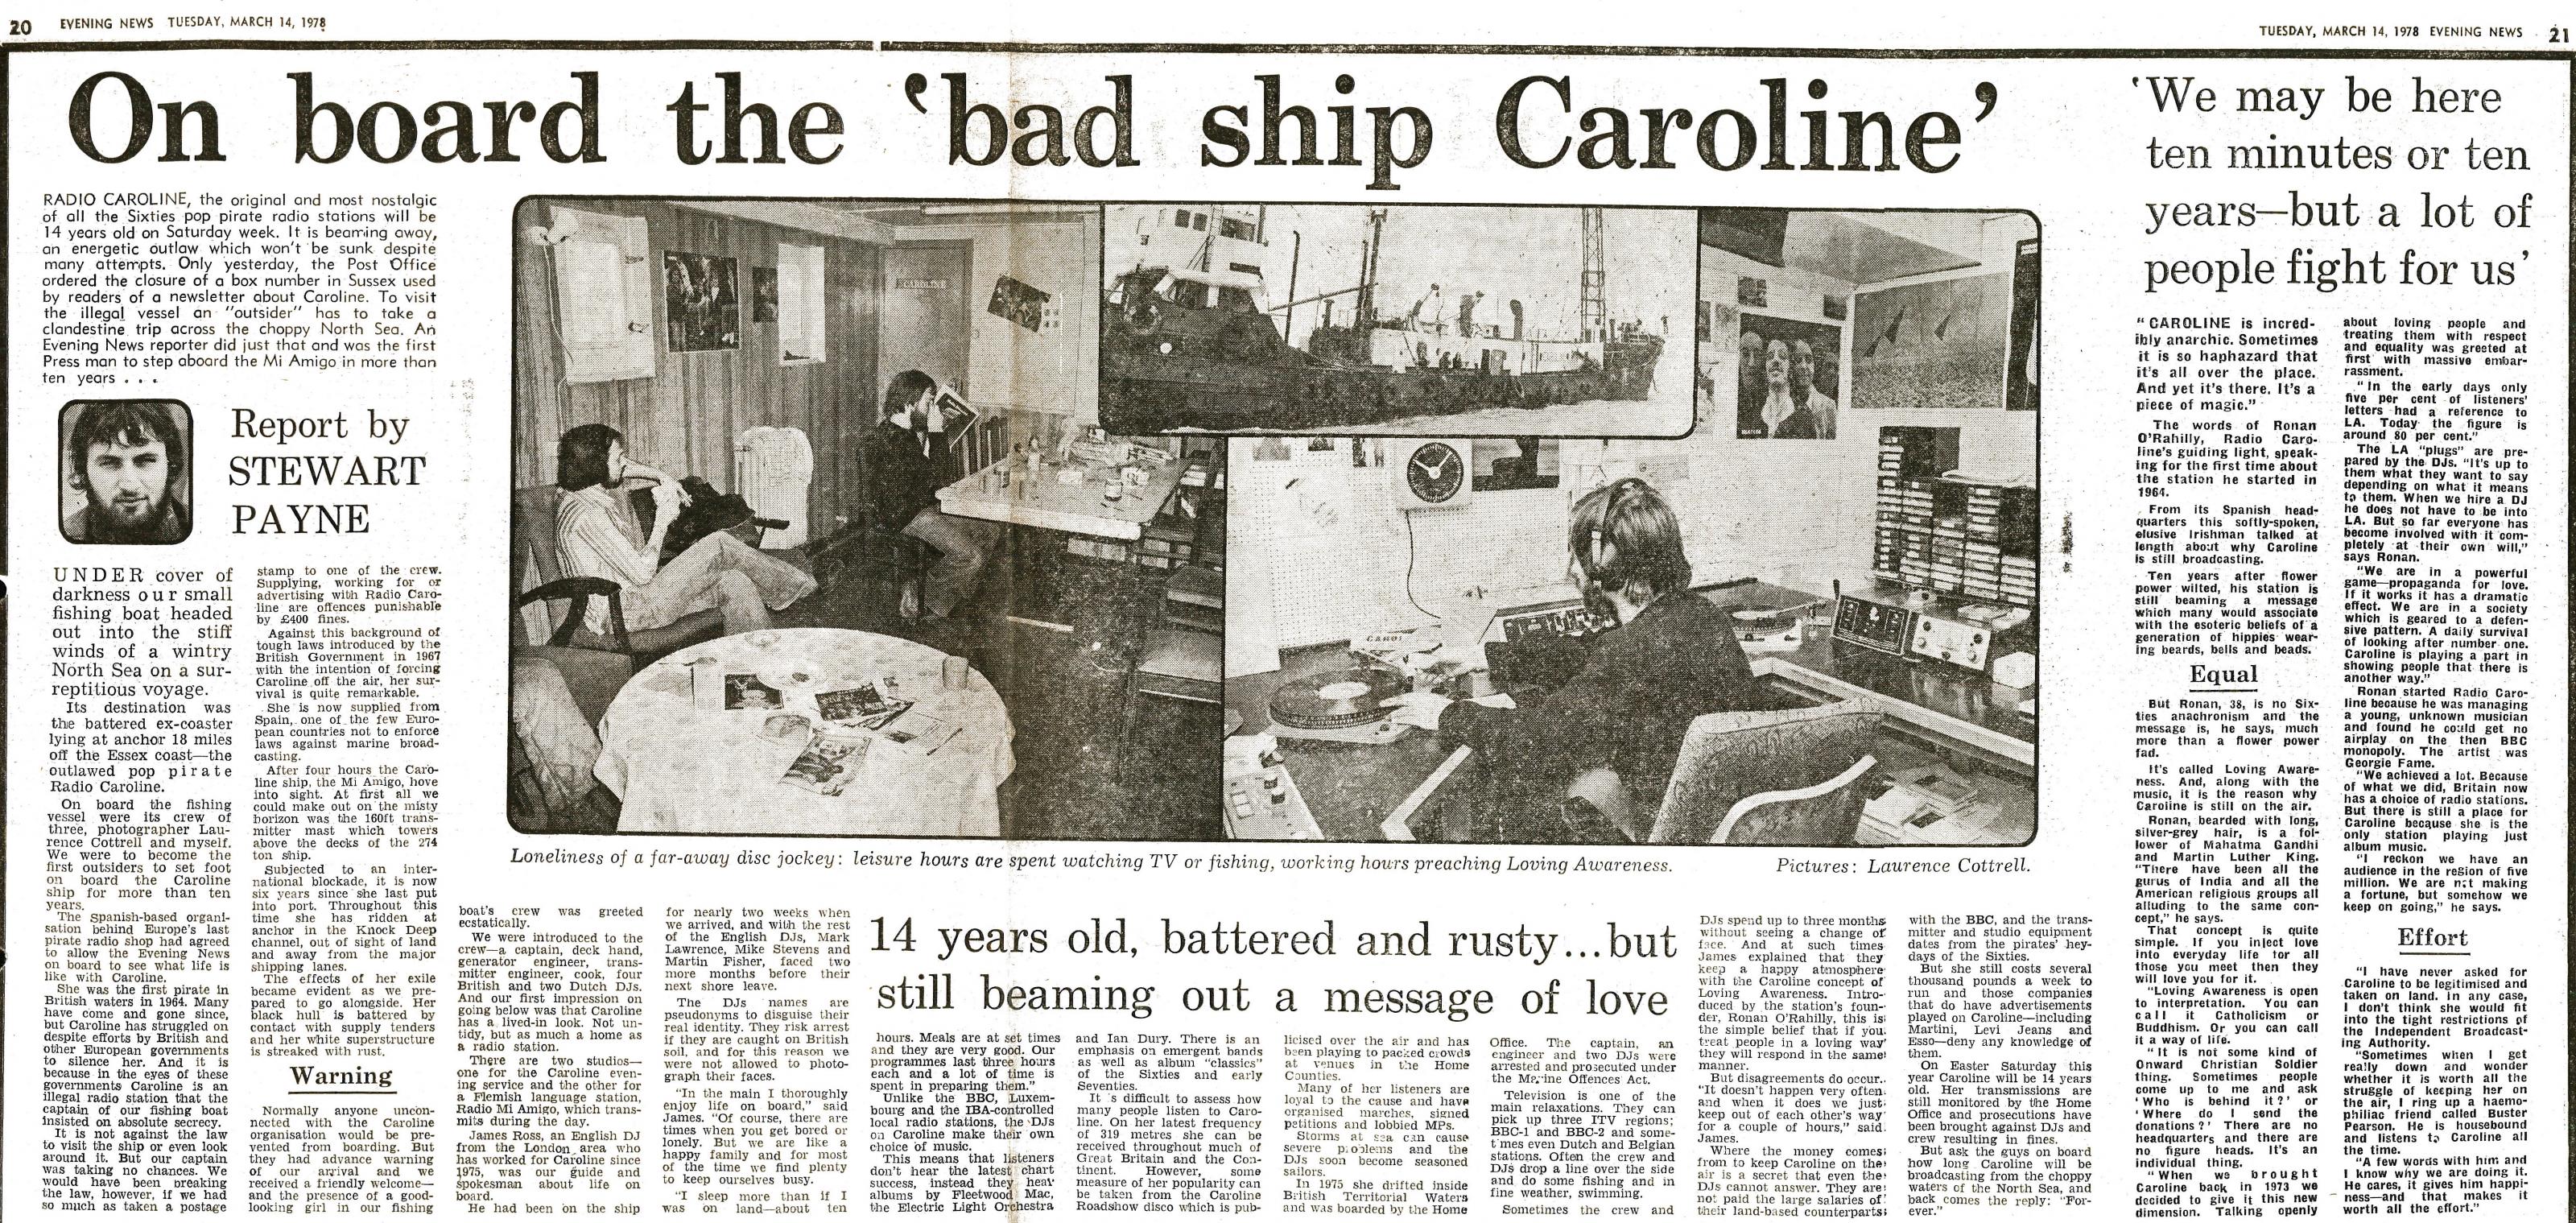 19780314 EN On board the bad ship Caroline.jpg